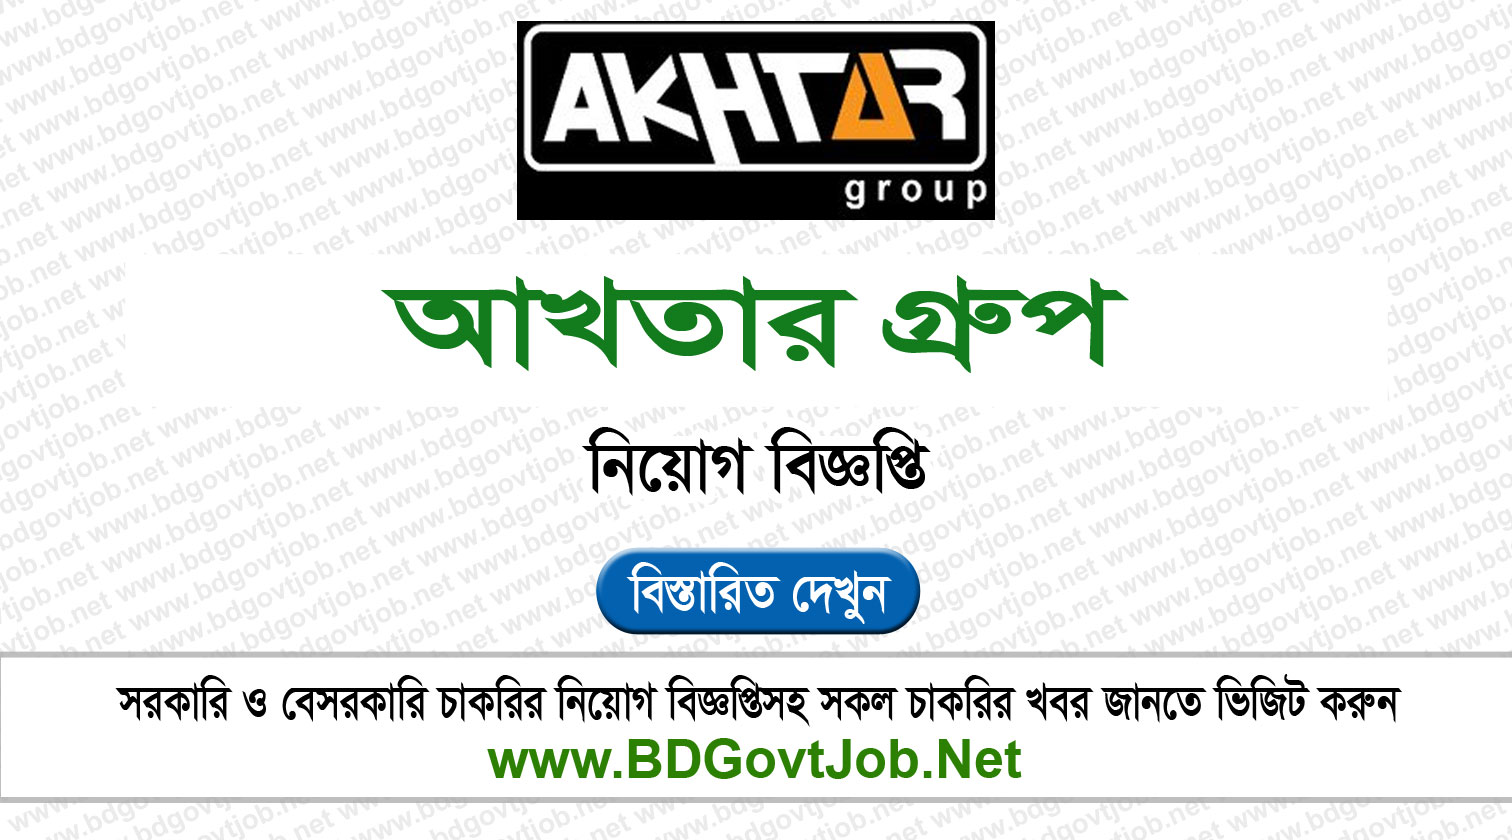 Akhtar Group Job Circular